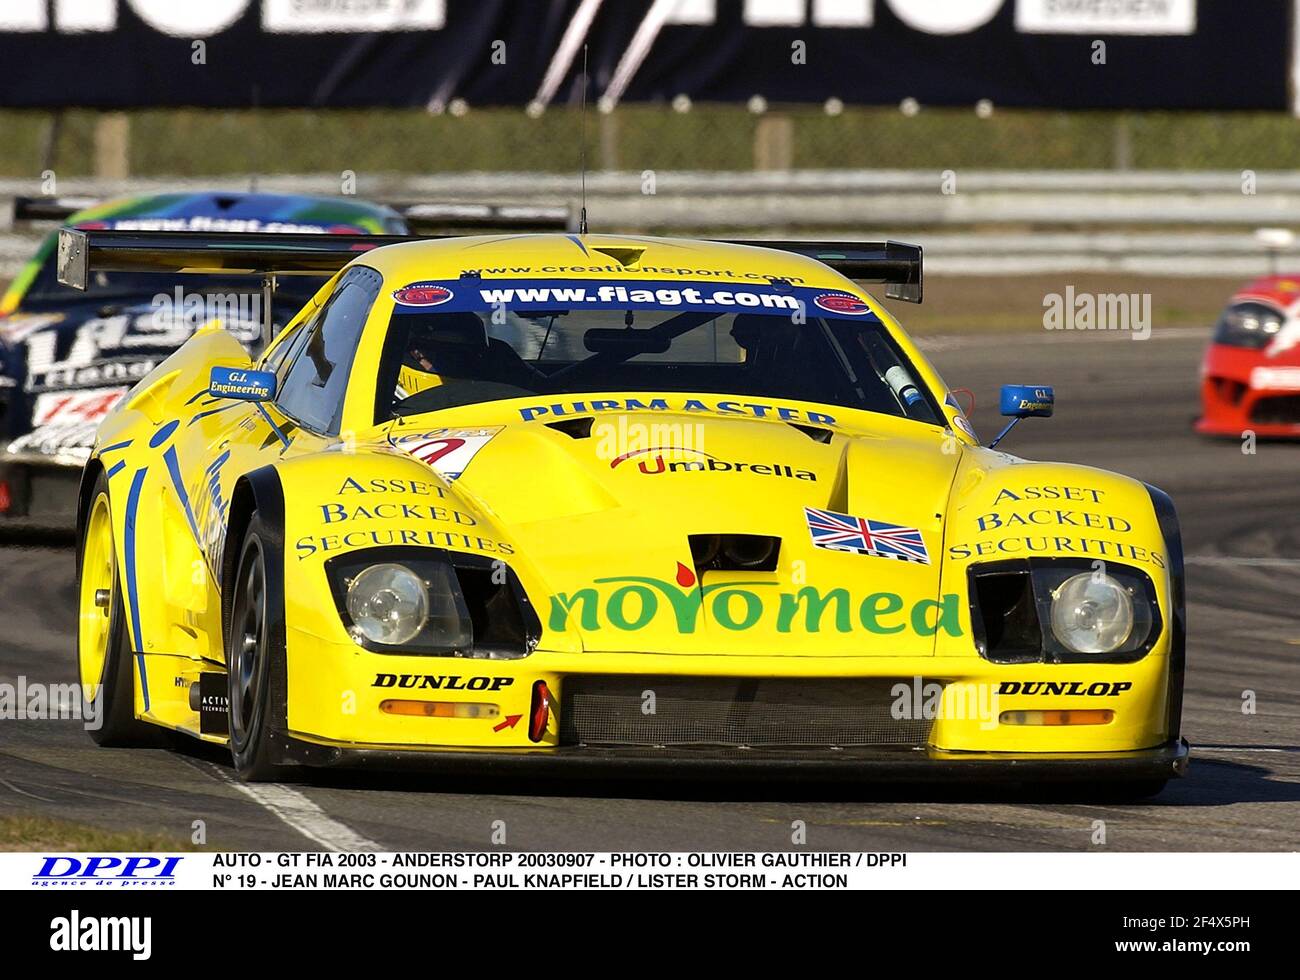 AUTO - GT FIA 2003 - ANDERSTORP 20030907 - PHOTO : OLIVIER GAUTHIER / DPPI N° 19 - JEAN MARC GOUNON - PAUL KNAPFIELD / LISTER STORM - ACTION Stock Photo